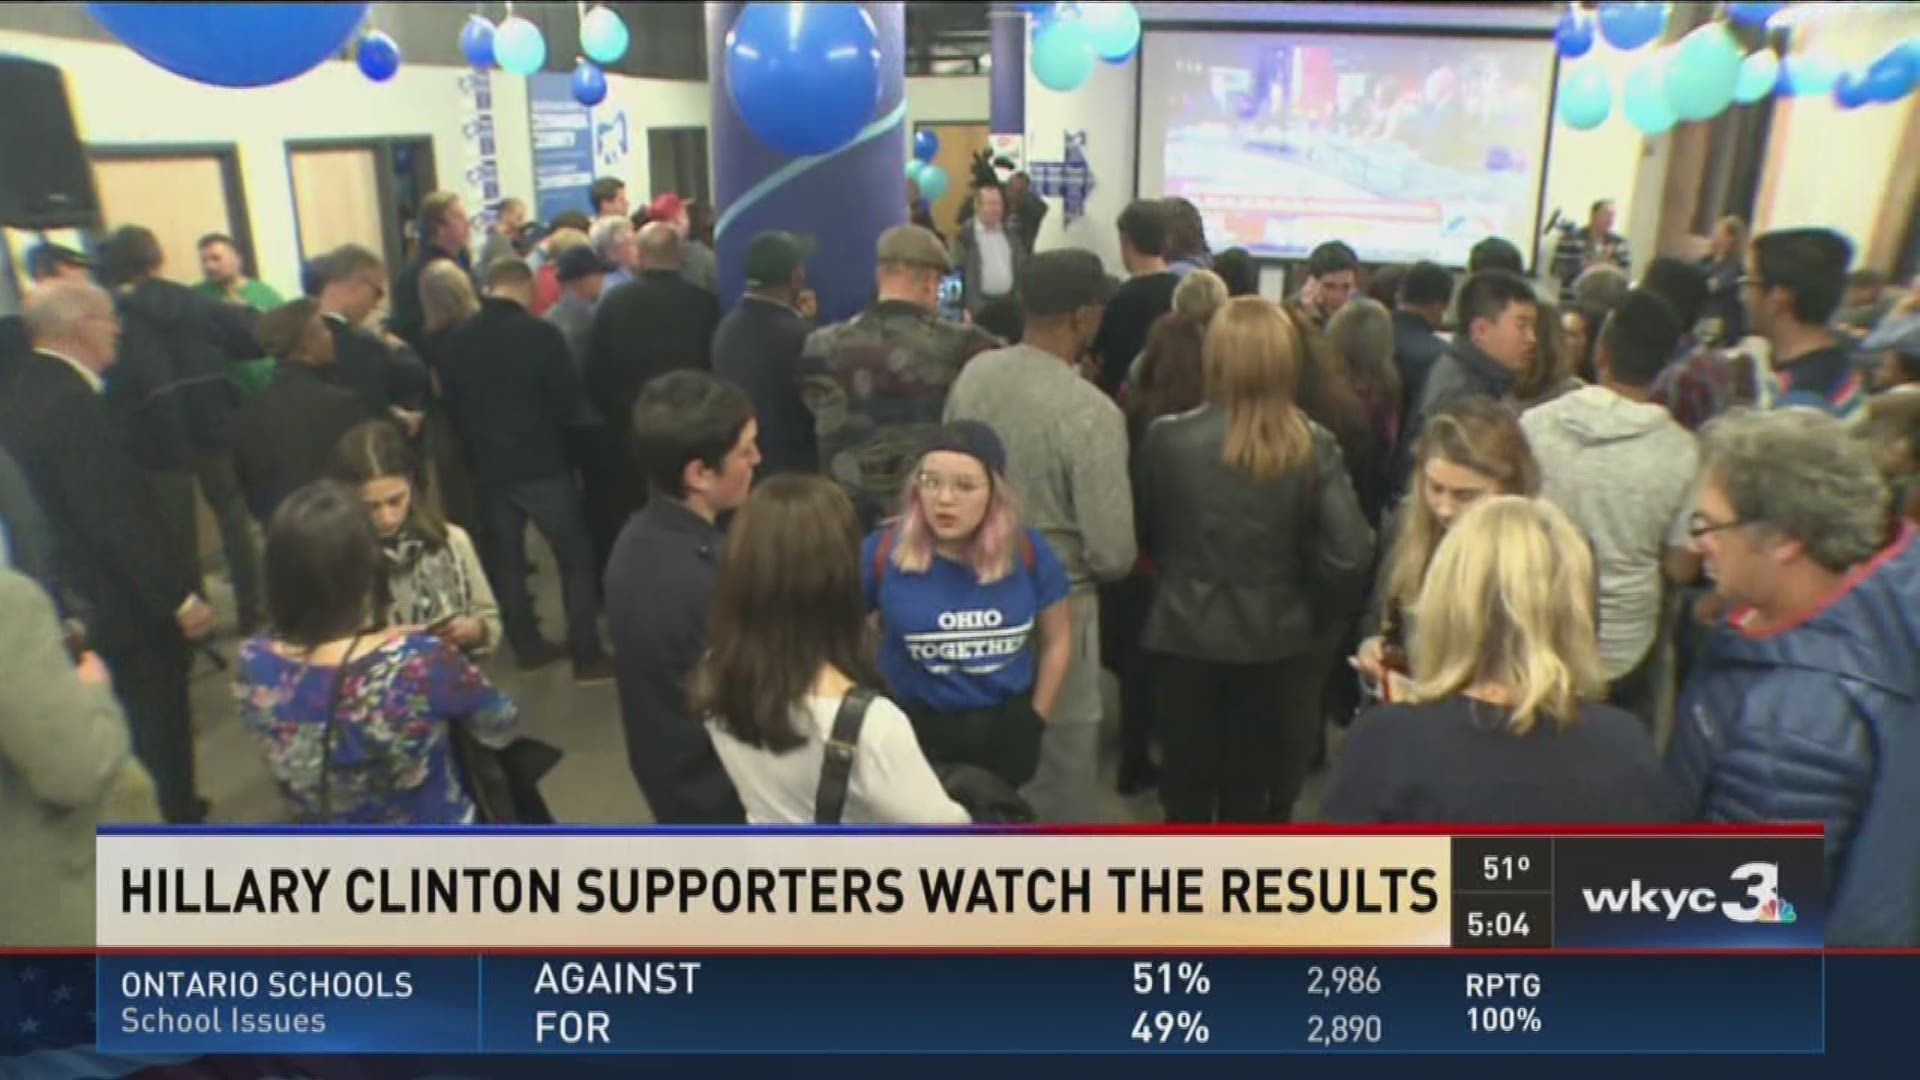 Hillary Clinton supporters watch the results: Tiffany Tarpley